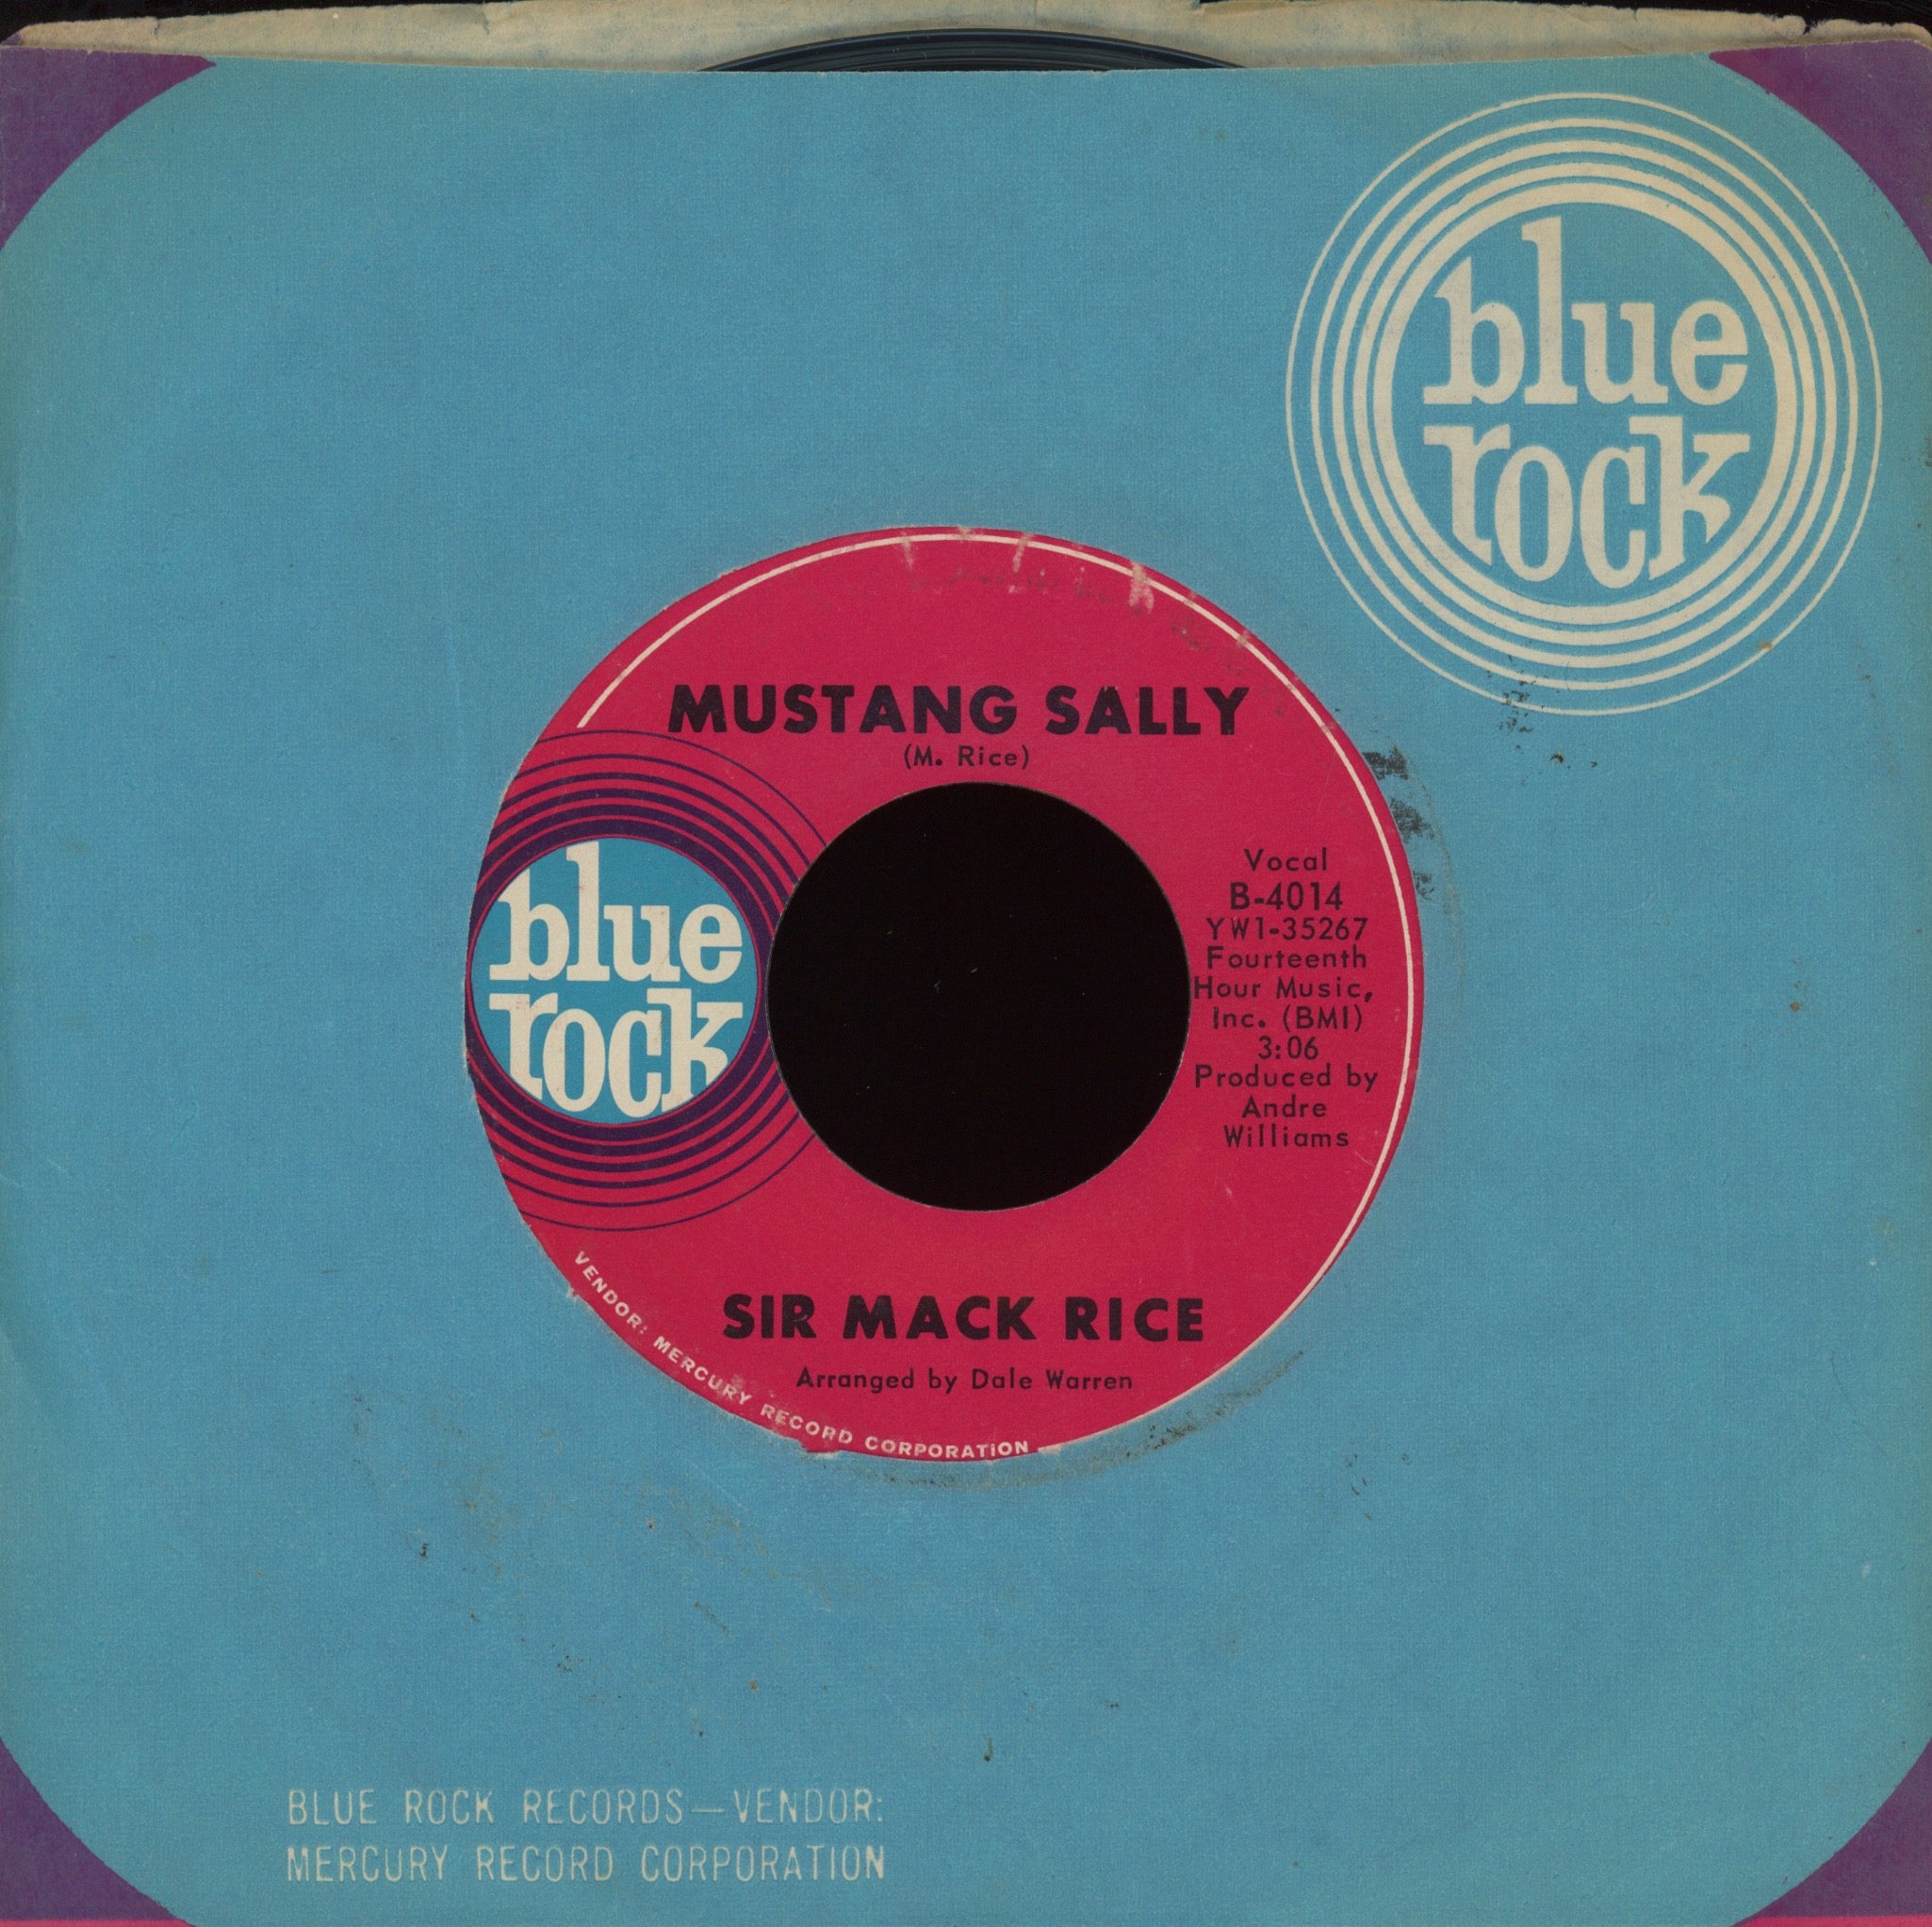 Sir Mack Rice - Mustang Sally on Blue Rock Funk 45